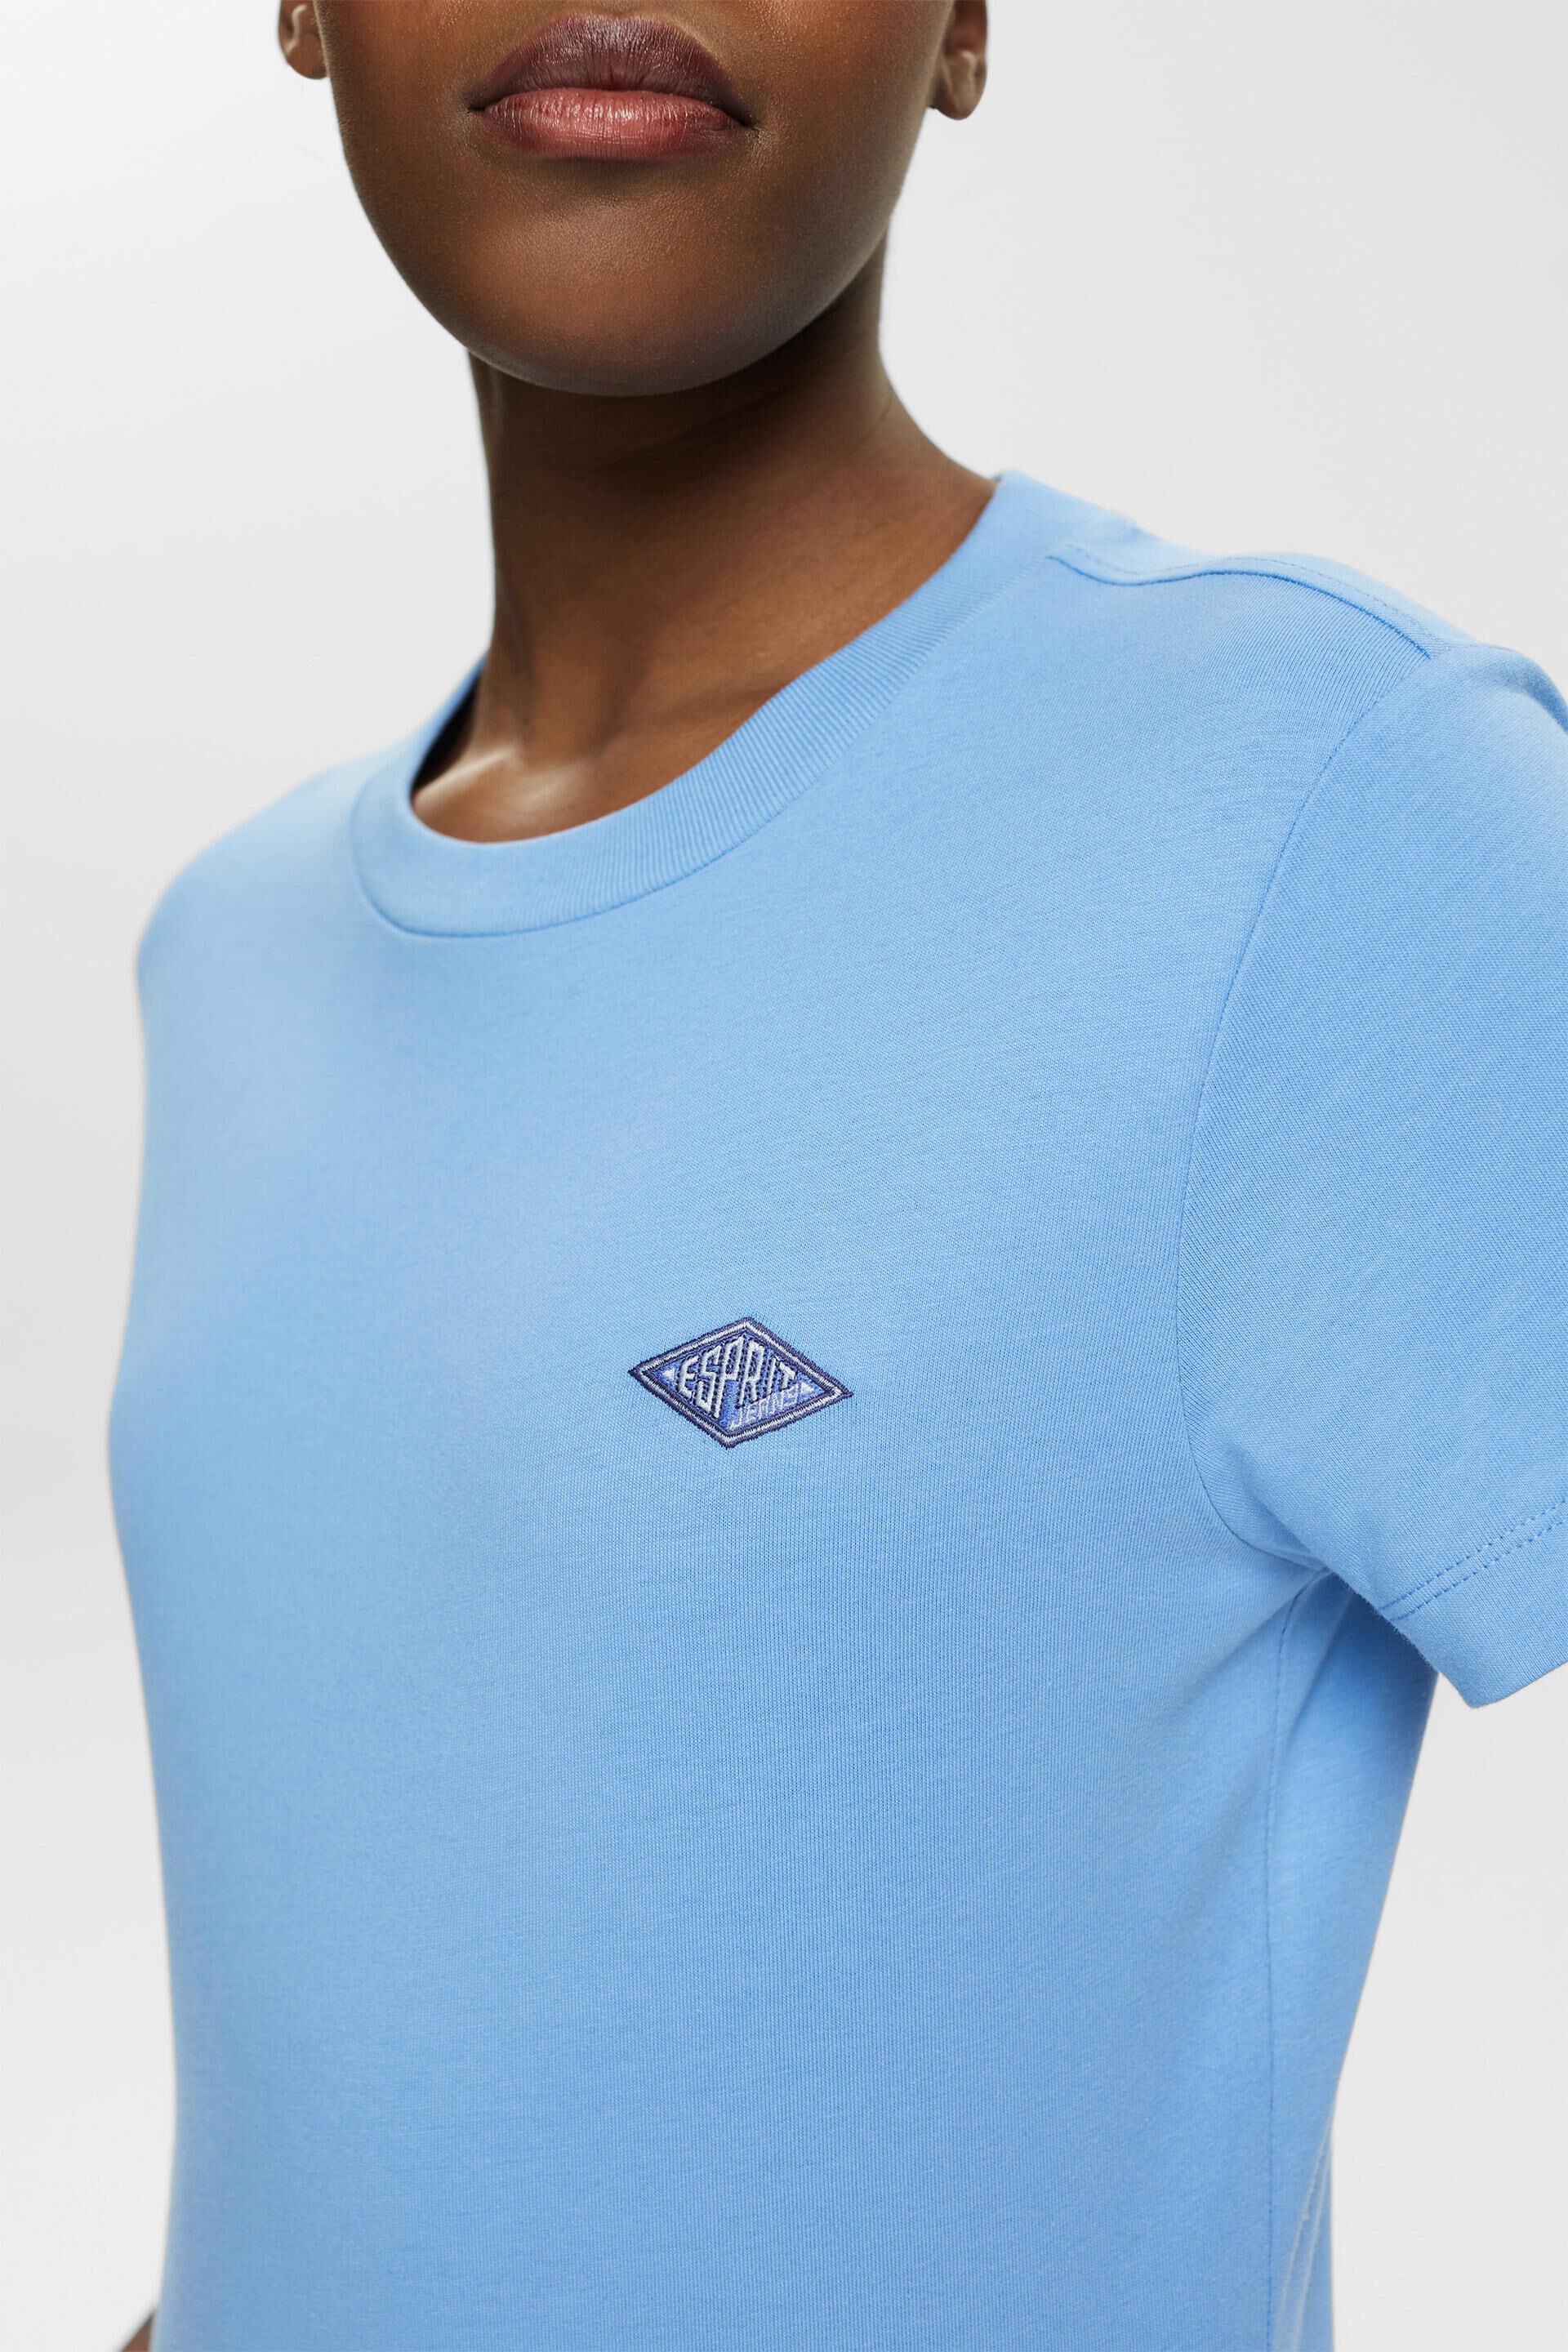 Esprit Damen Baumwoll-T-Shirt mit gesticktem Logo